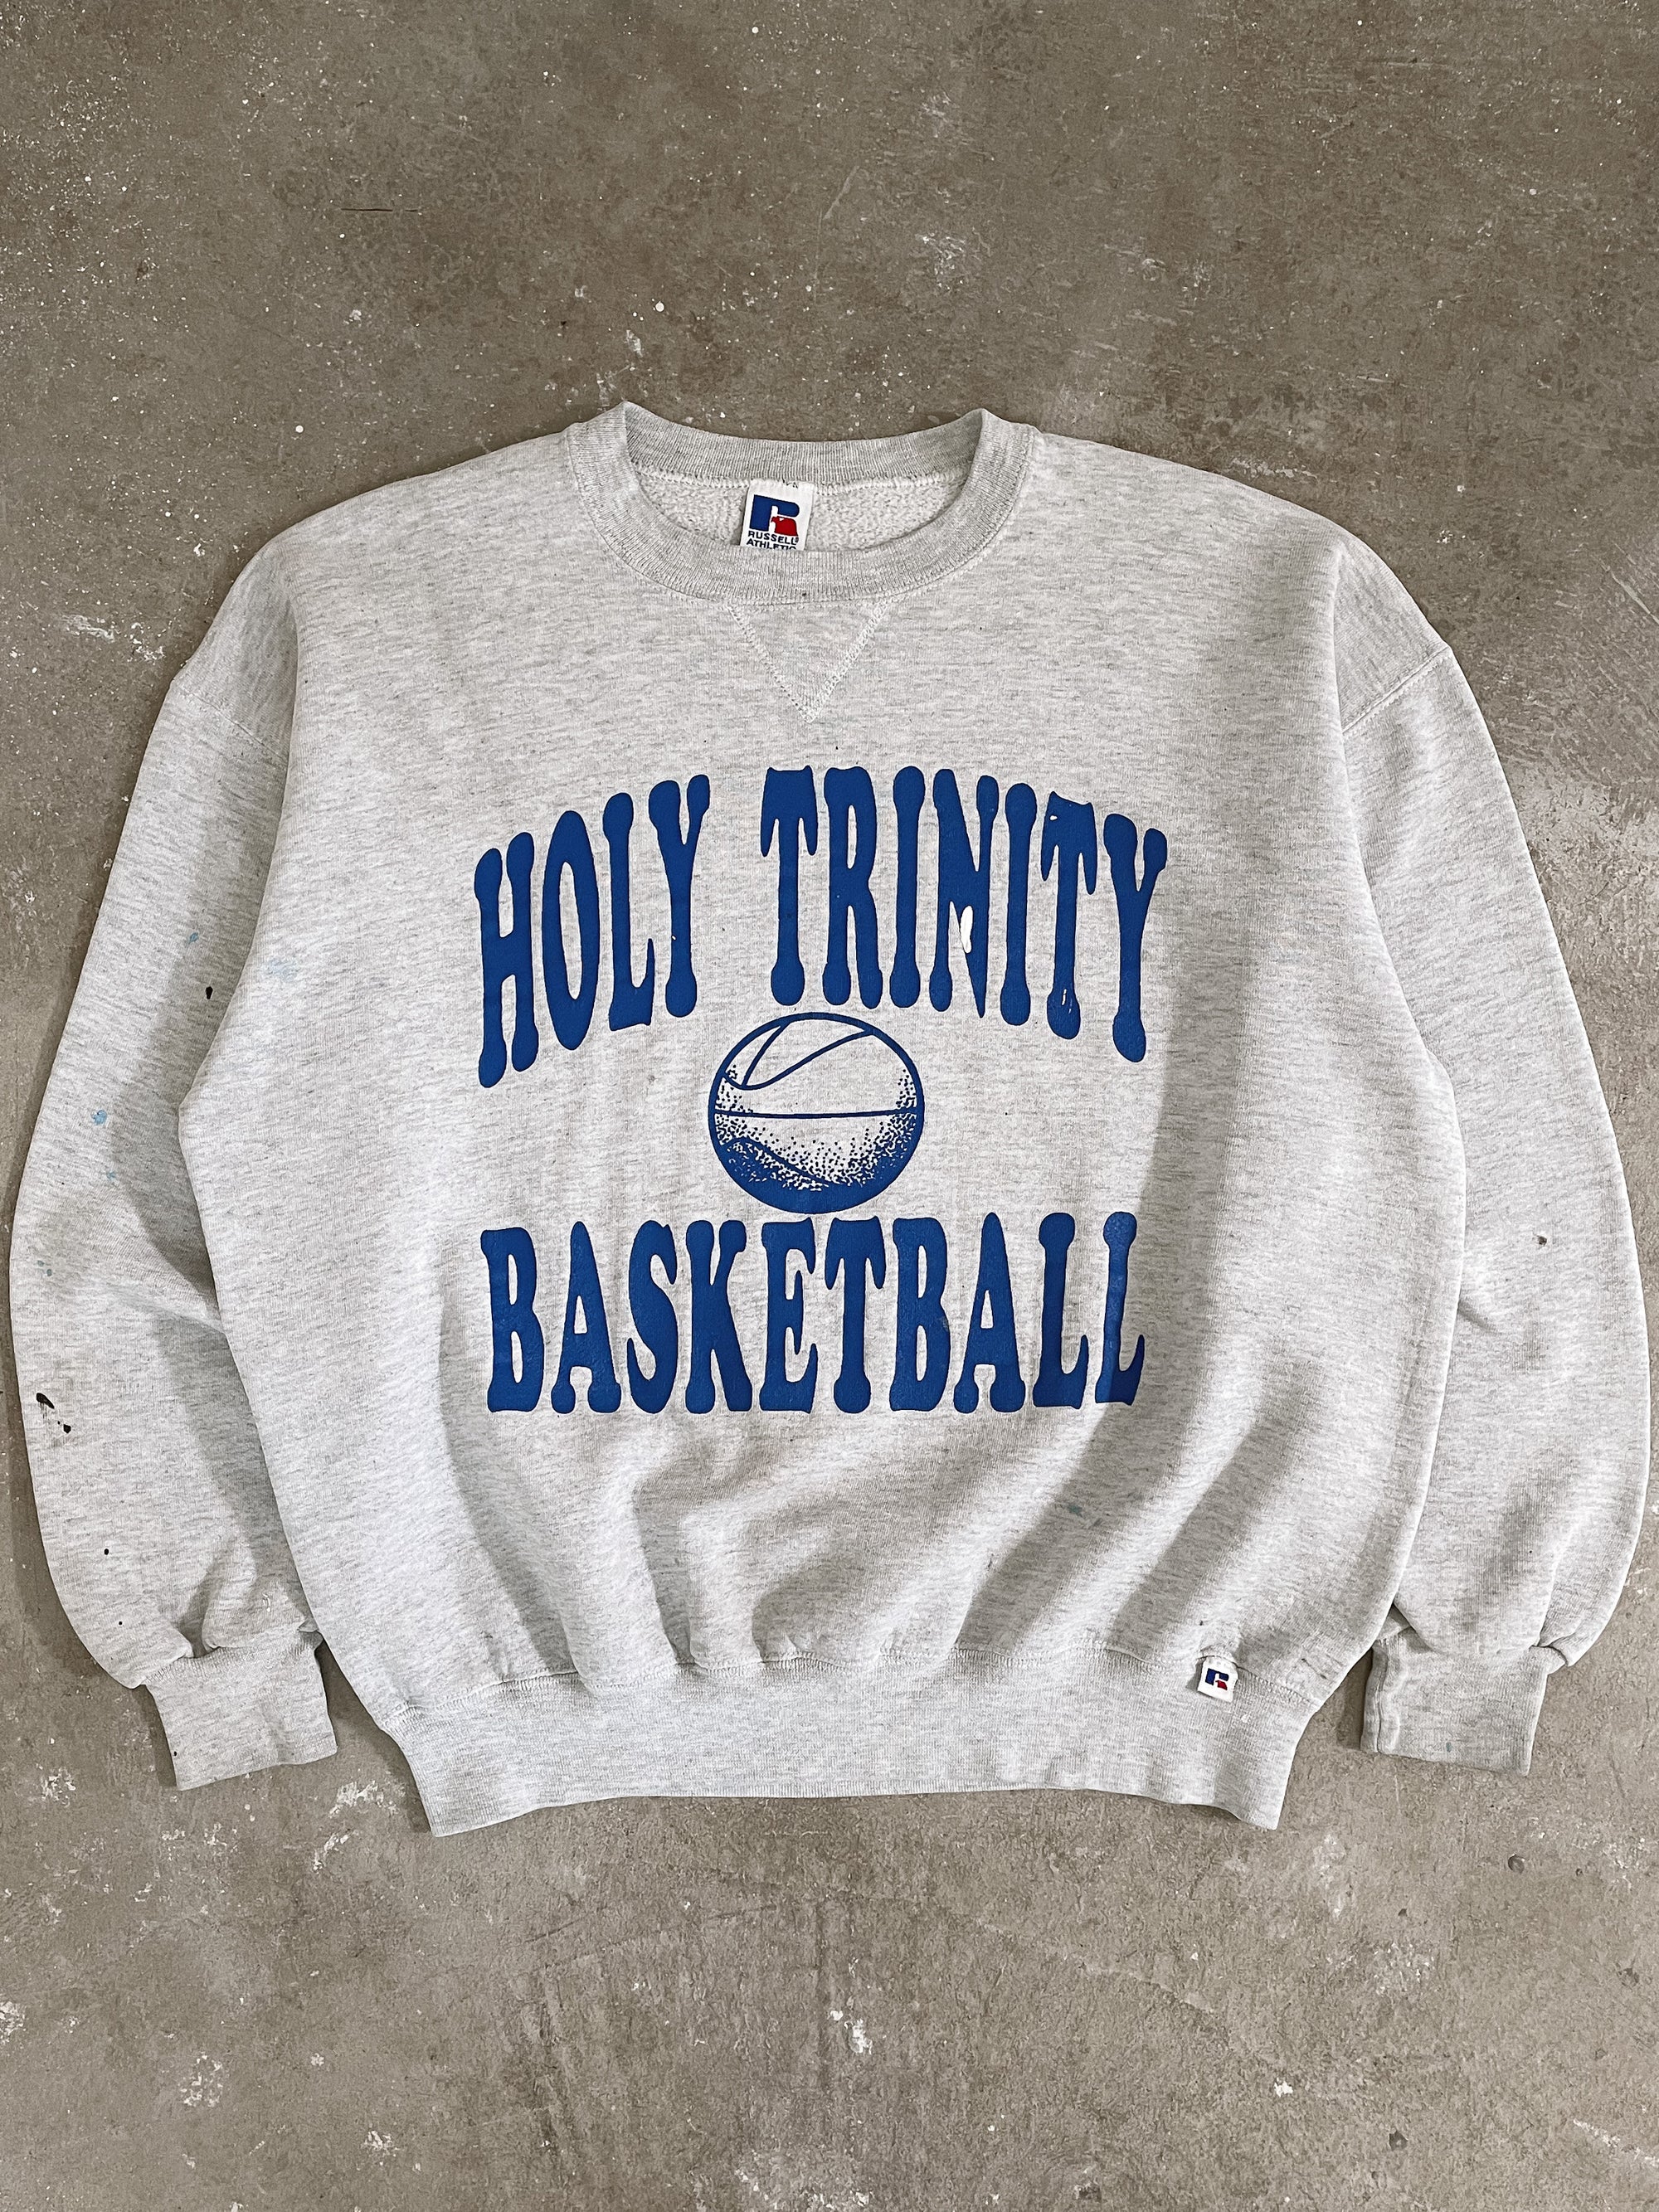 1990s Russell “Holy Trinity Basketball” Sweatshirt (L/XL)